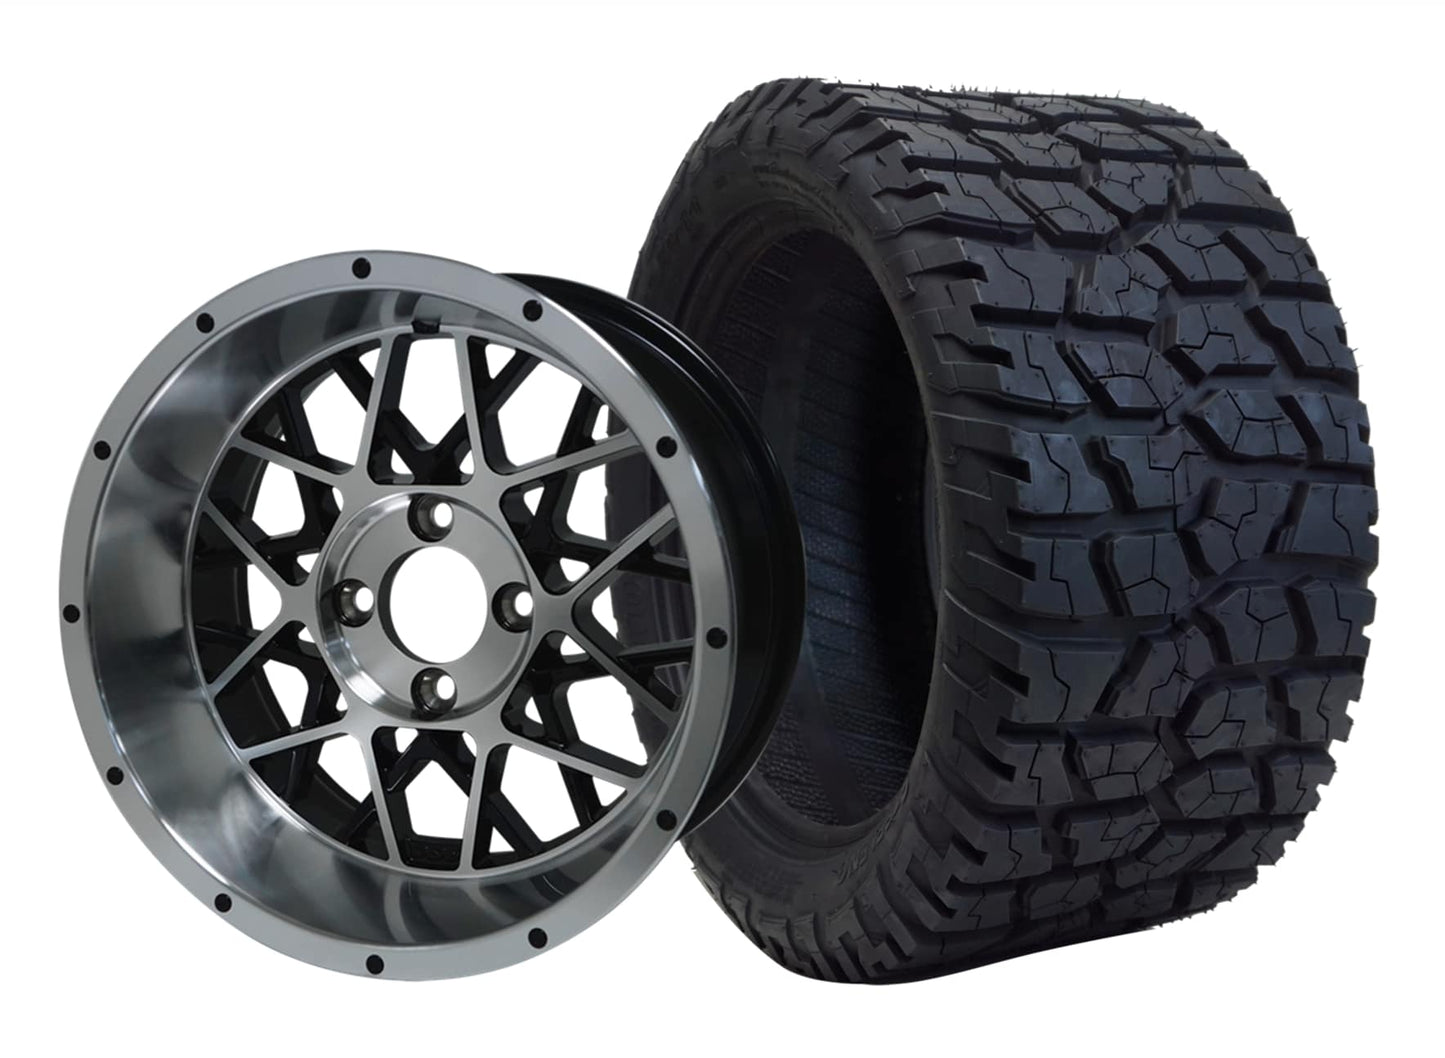 BNDL-TR1401-WH1419-LN0001-CC0001 – SGC 14″ Venom Machined/Black Wheel – Aluminum Alloy / STEELENG 22″x10.5″-14″ GATOR All Terrain Tire DOT Approved - Set of 4